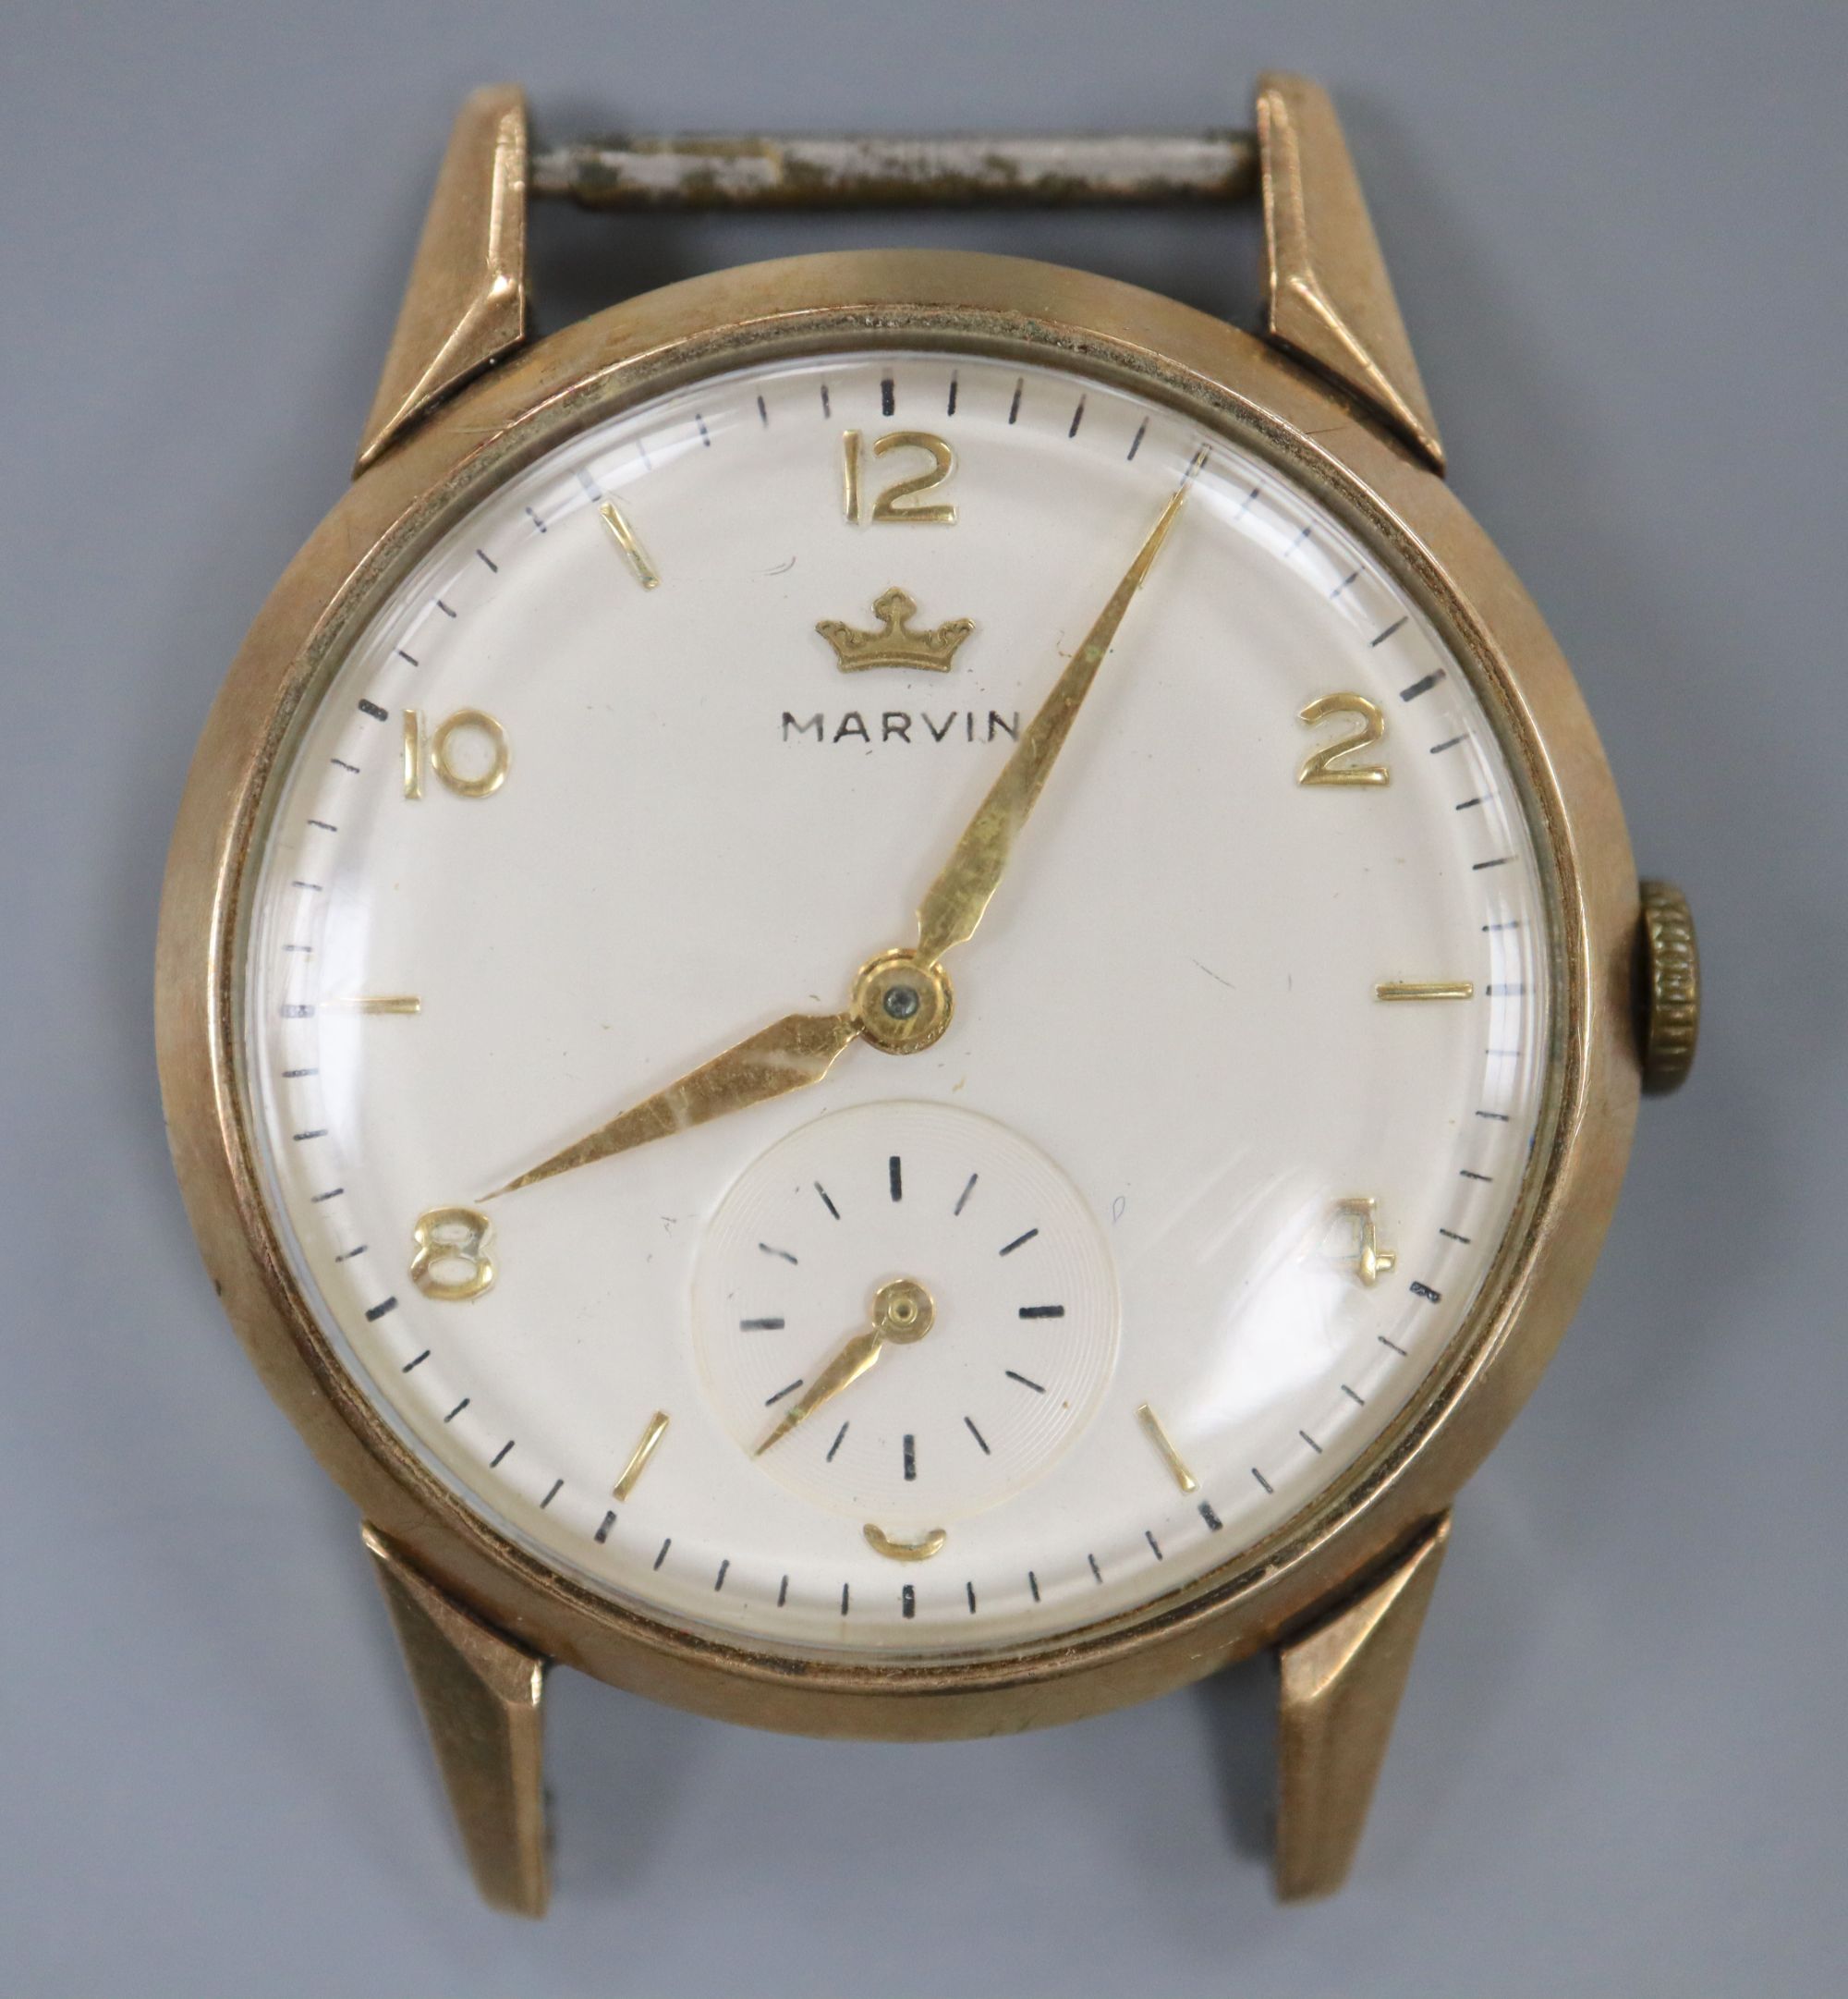 A gentlemans 9ct gold Marvin manual wind wrist watch, no strap, case diameter 30mm ex. crown, gross 22.8 grams.